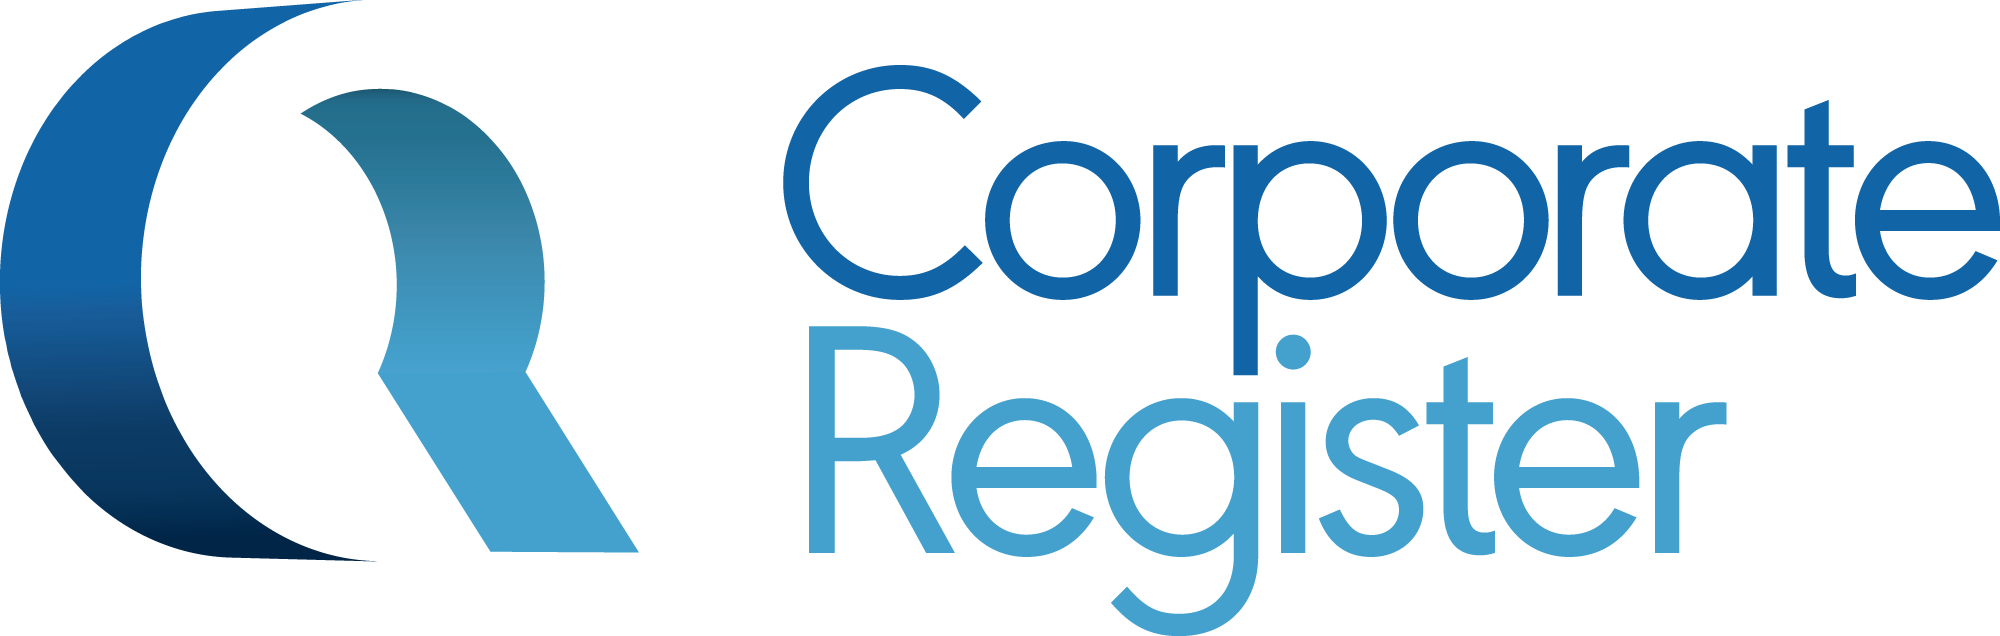 Corporate Register Logo